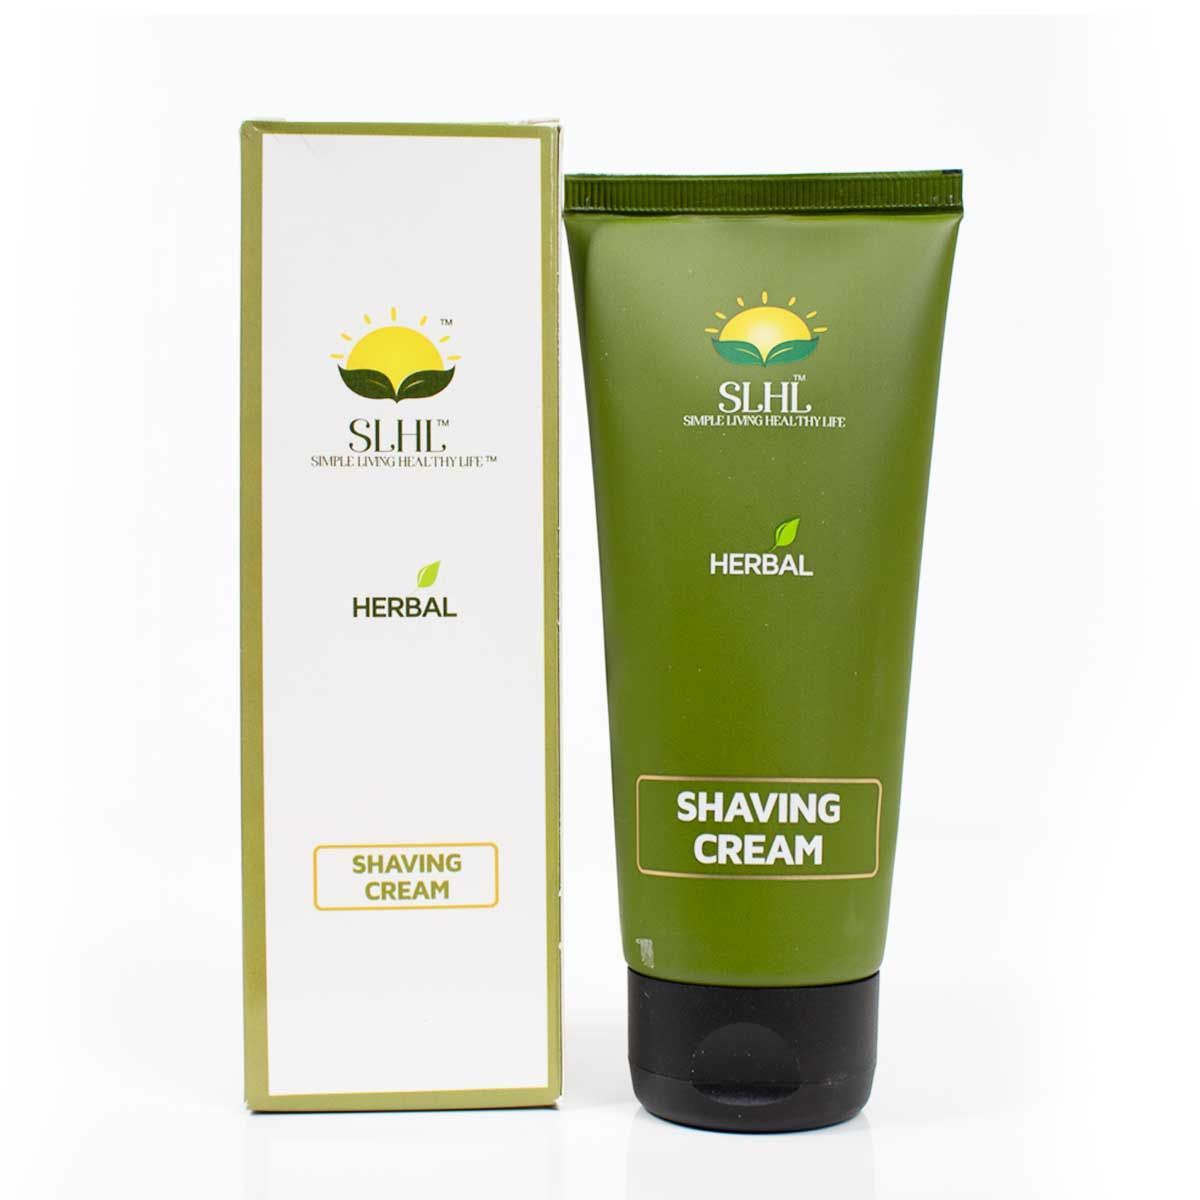 Simple Living Healthy Life Herbal Shaving Cream 3.4oz